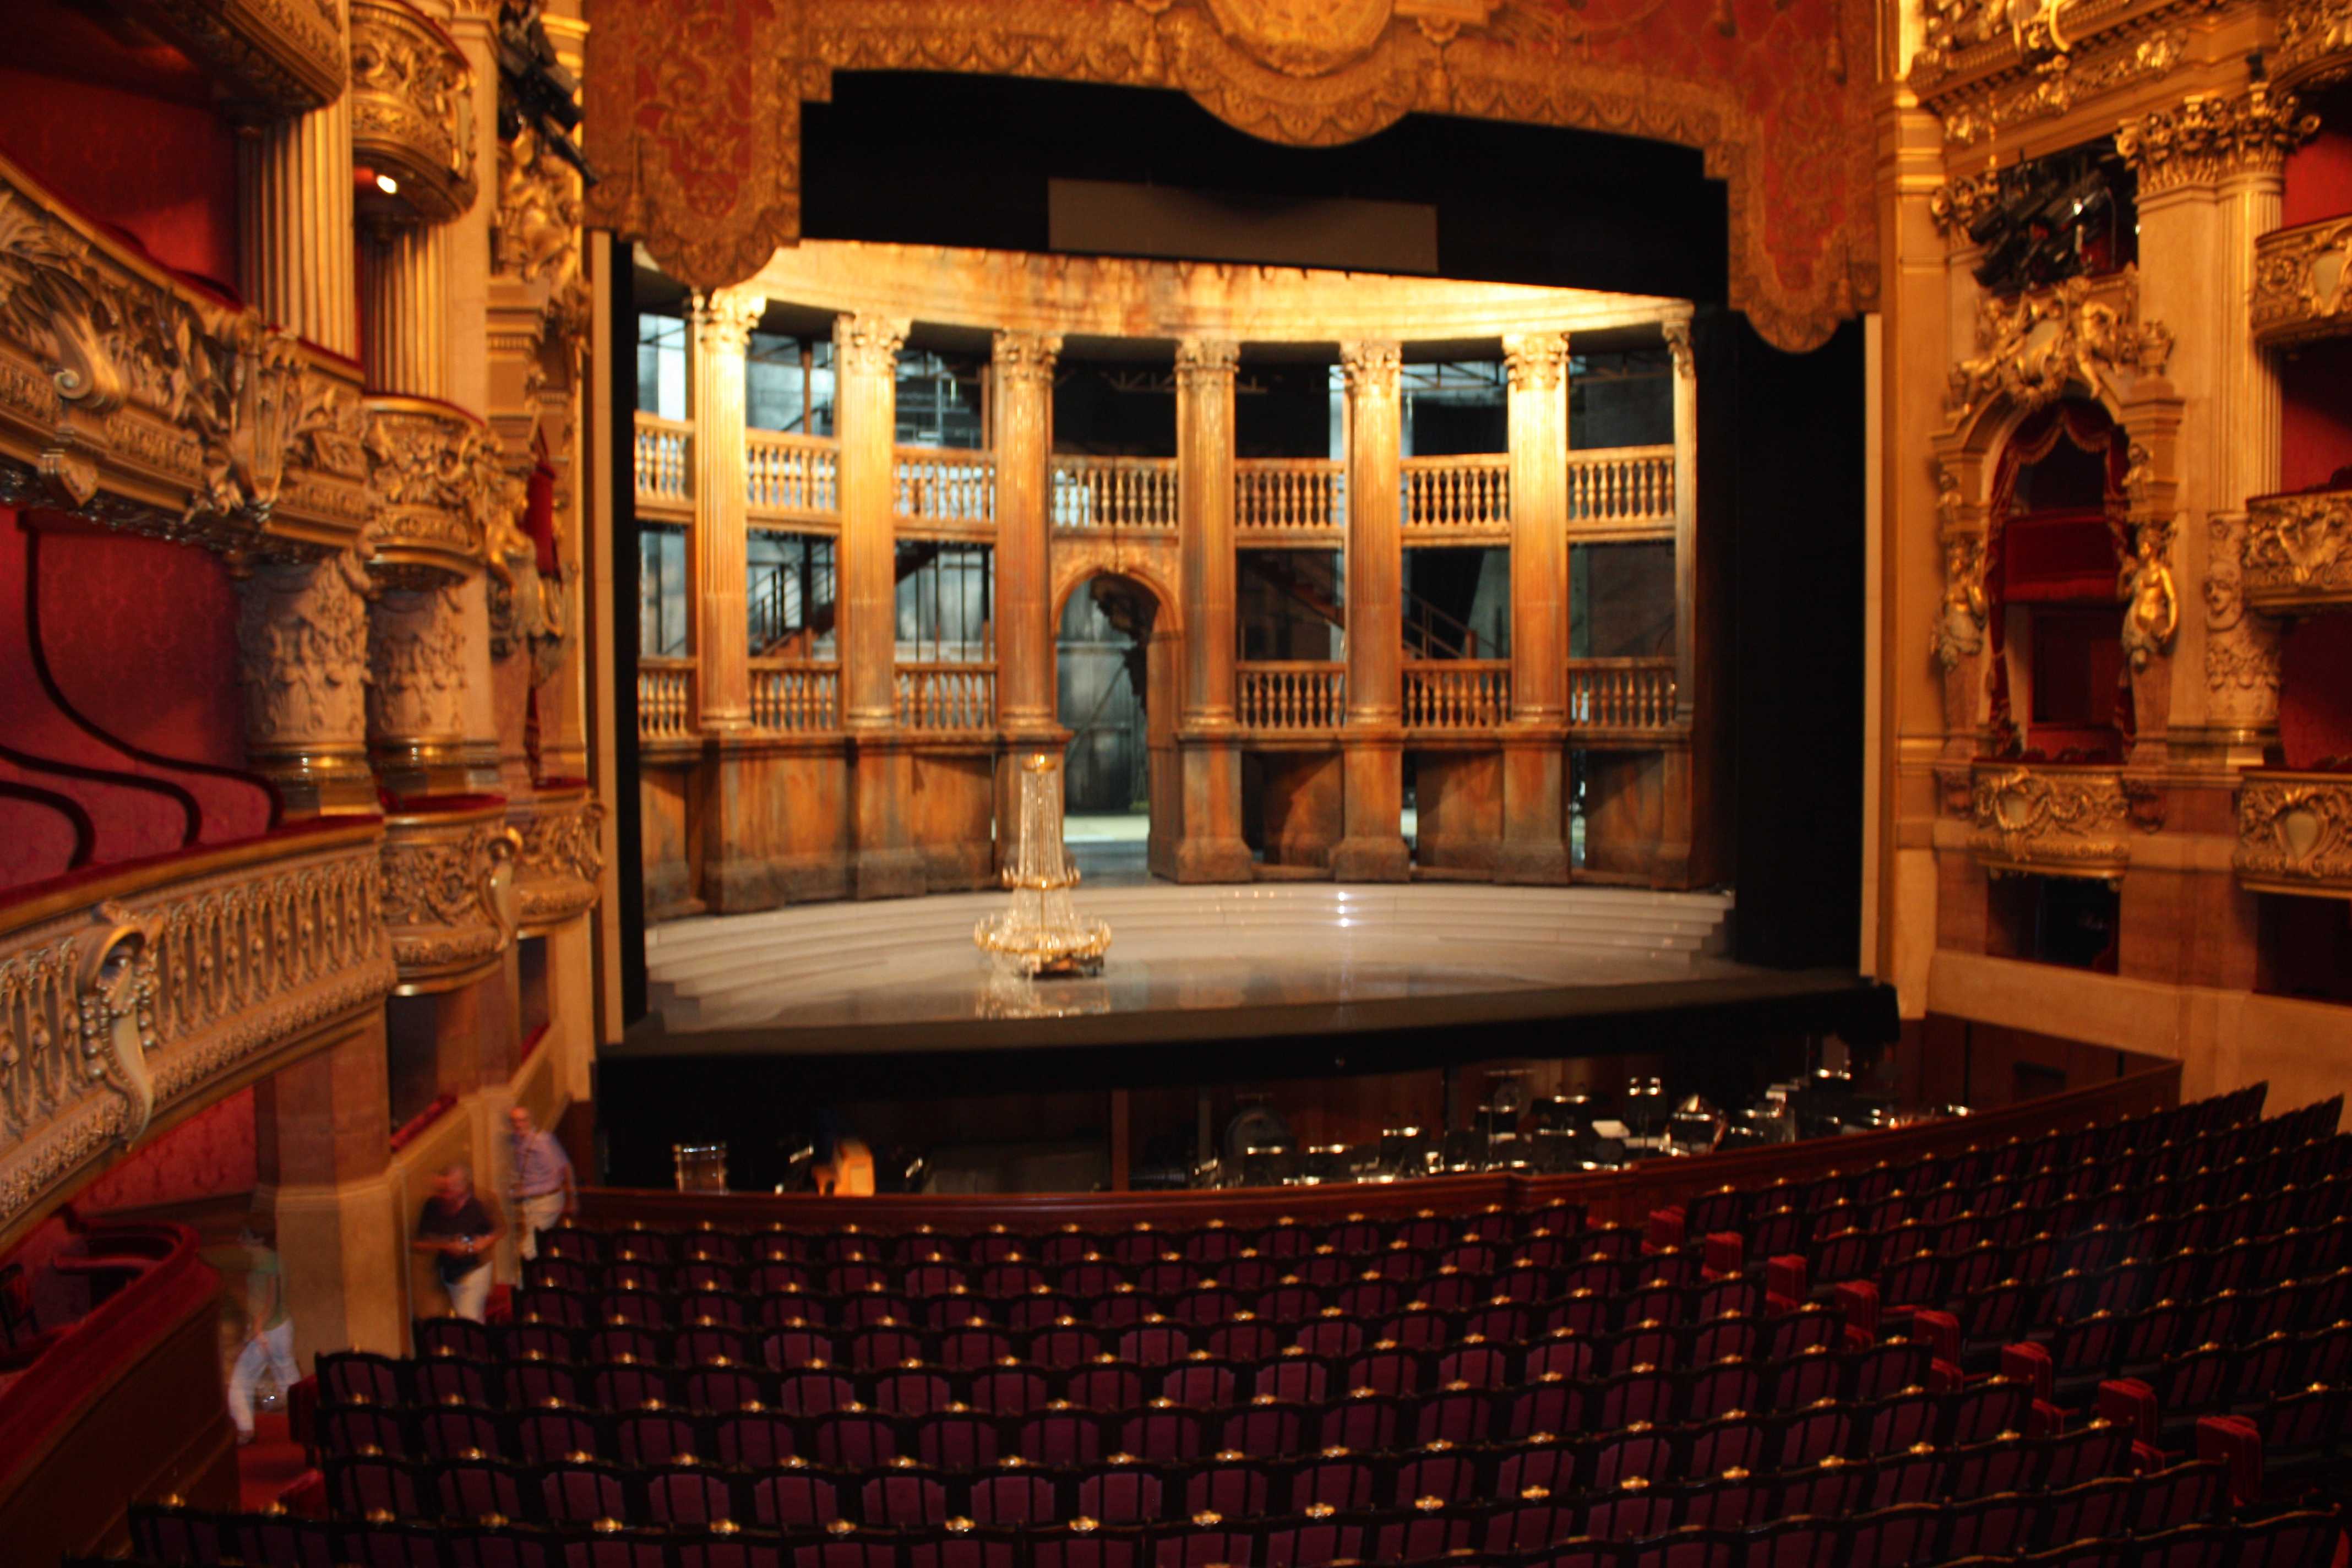 Theater de. Театр комеди Франсез 19 век. Театр комеди Франсез в Париже интерьер. Опера Монте Карло внутри. Театр Могадор в Париже.